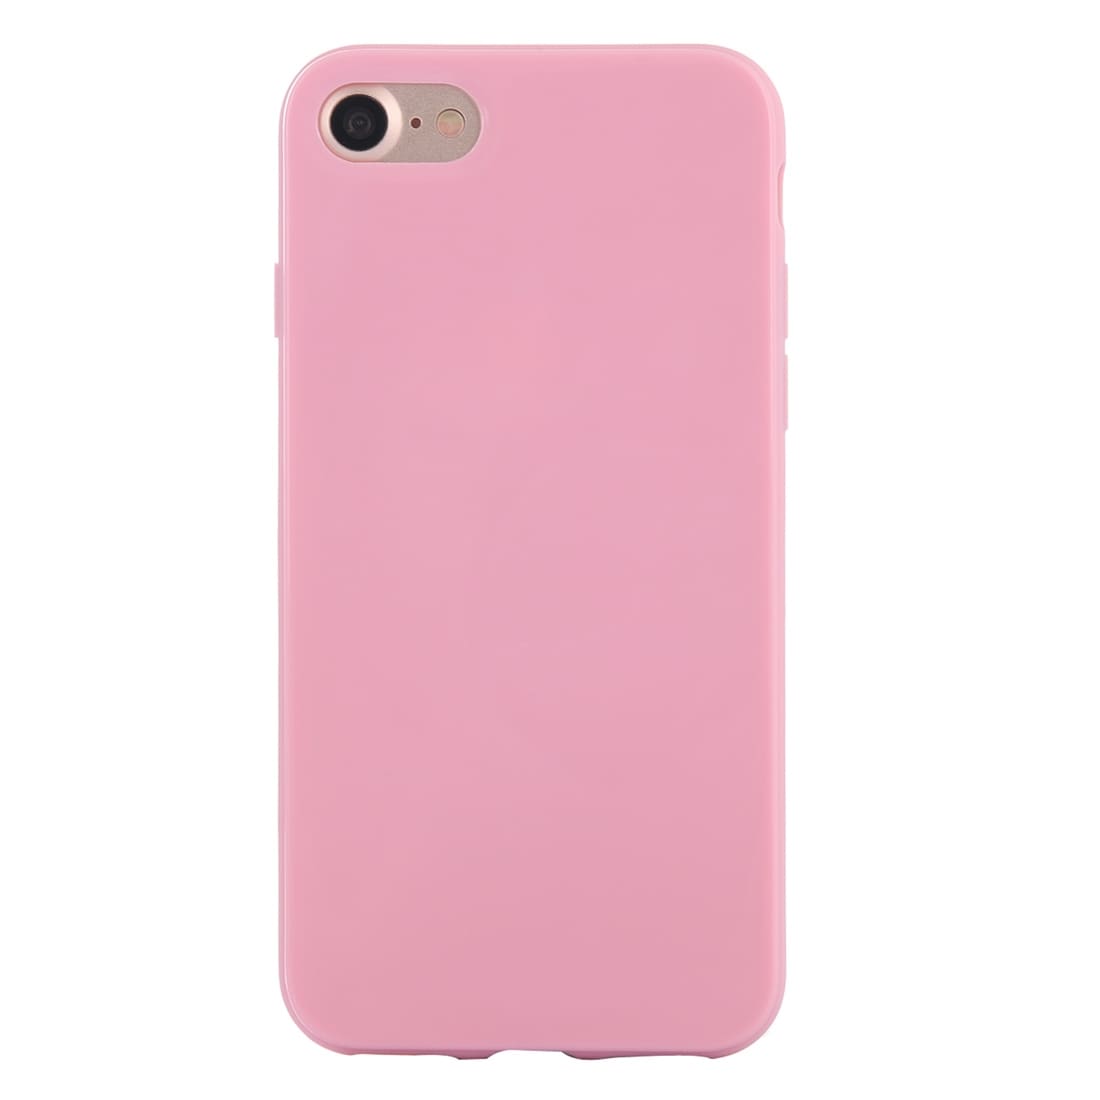 Silikonskal iPhone 8 / 7 i rosa